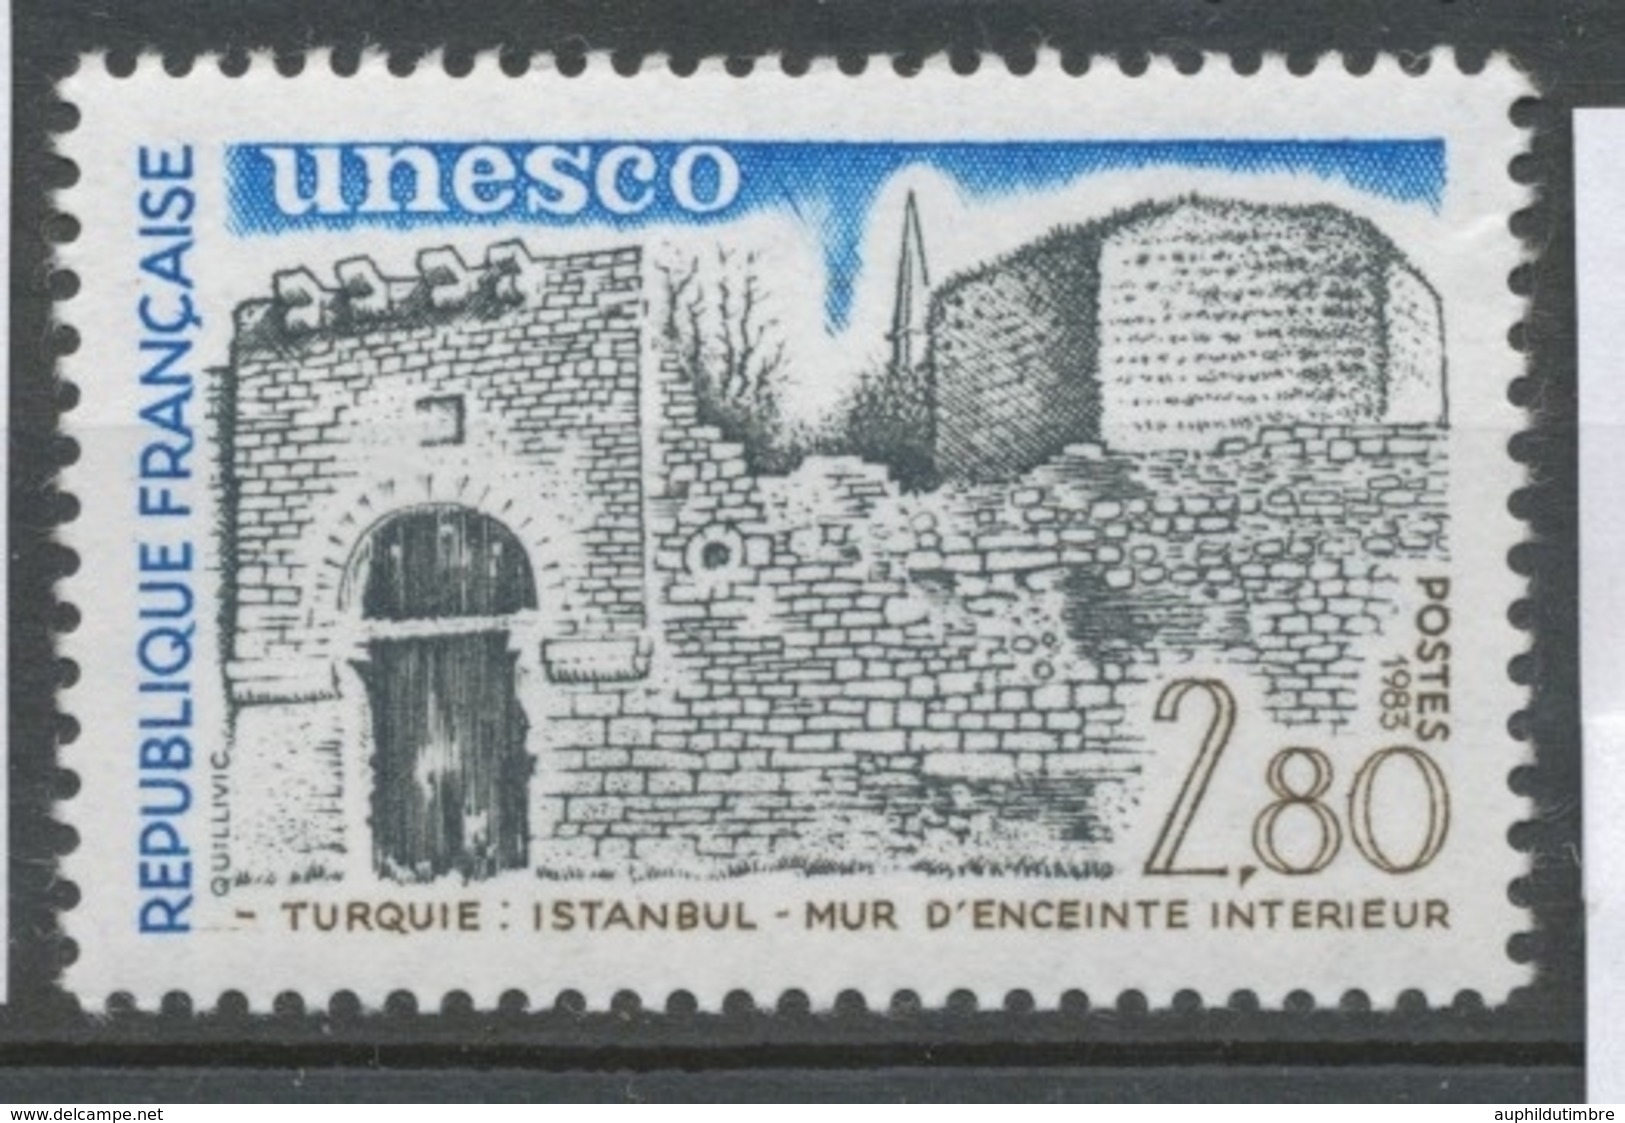 Service N°76 UNESCO Mur D'enceinte Istanbul - Turquie 2f80 ZS76 - Ungebraucht